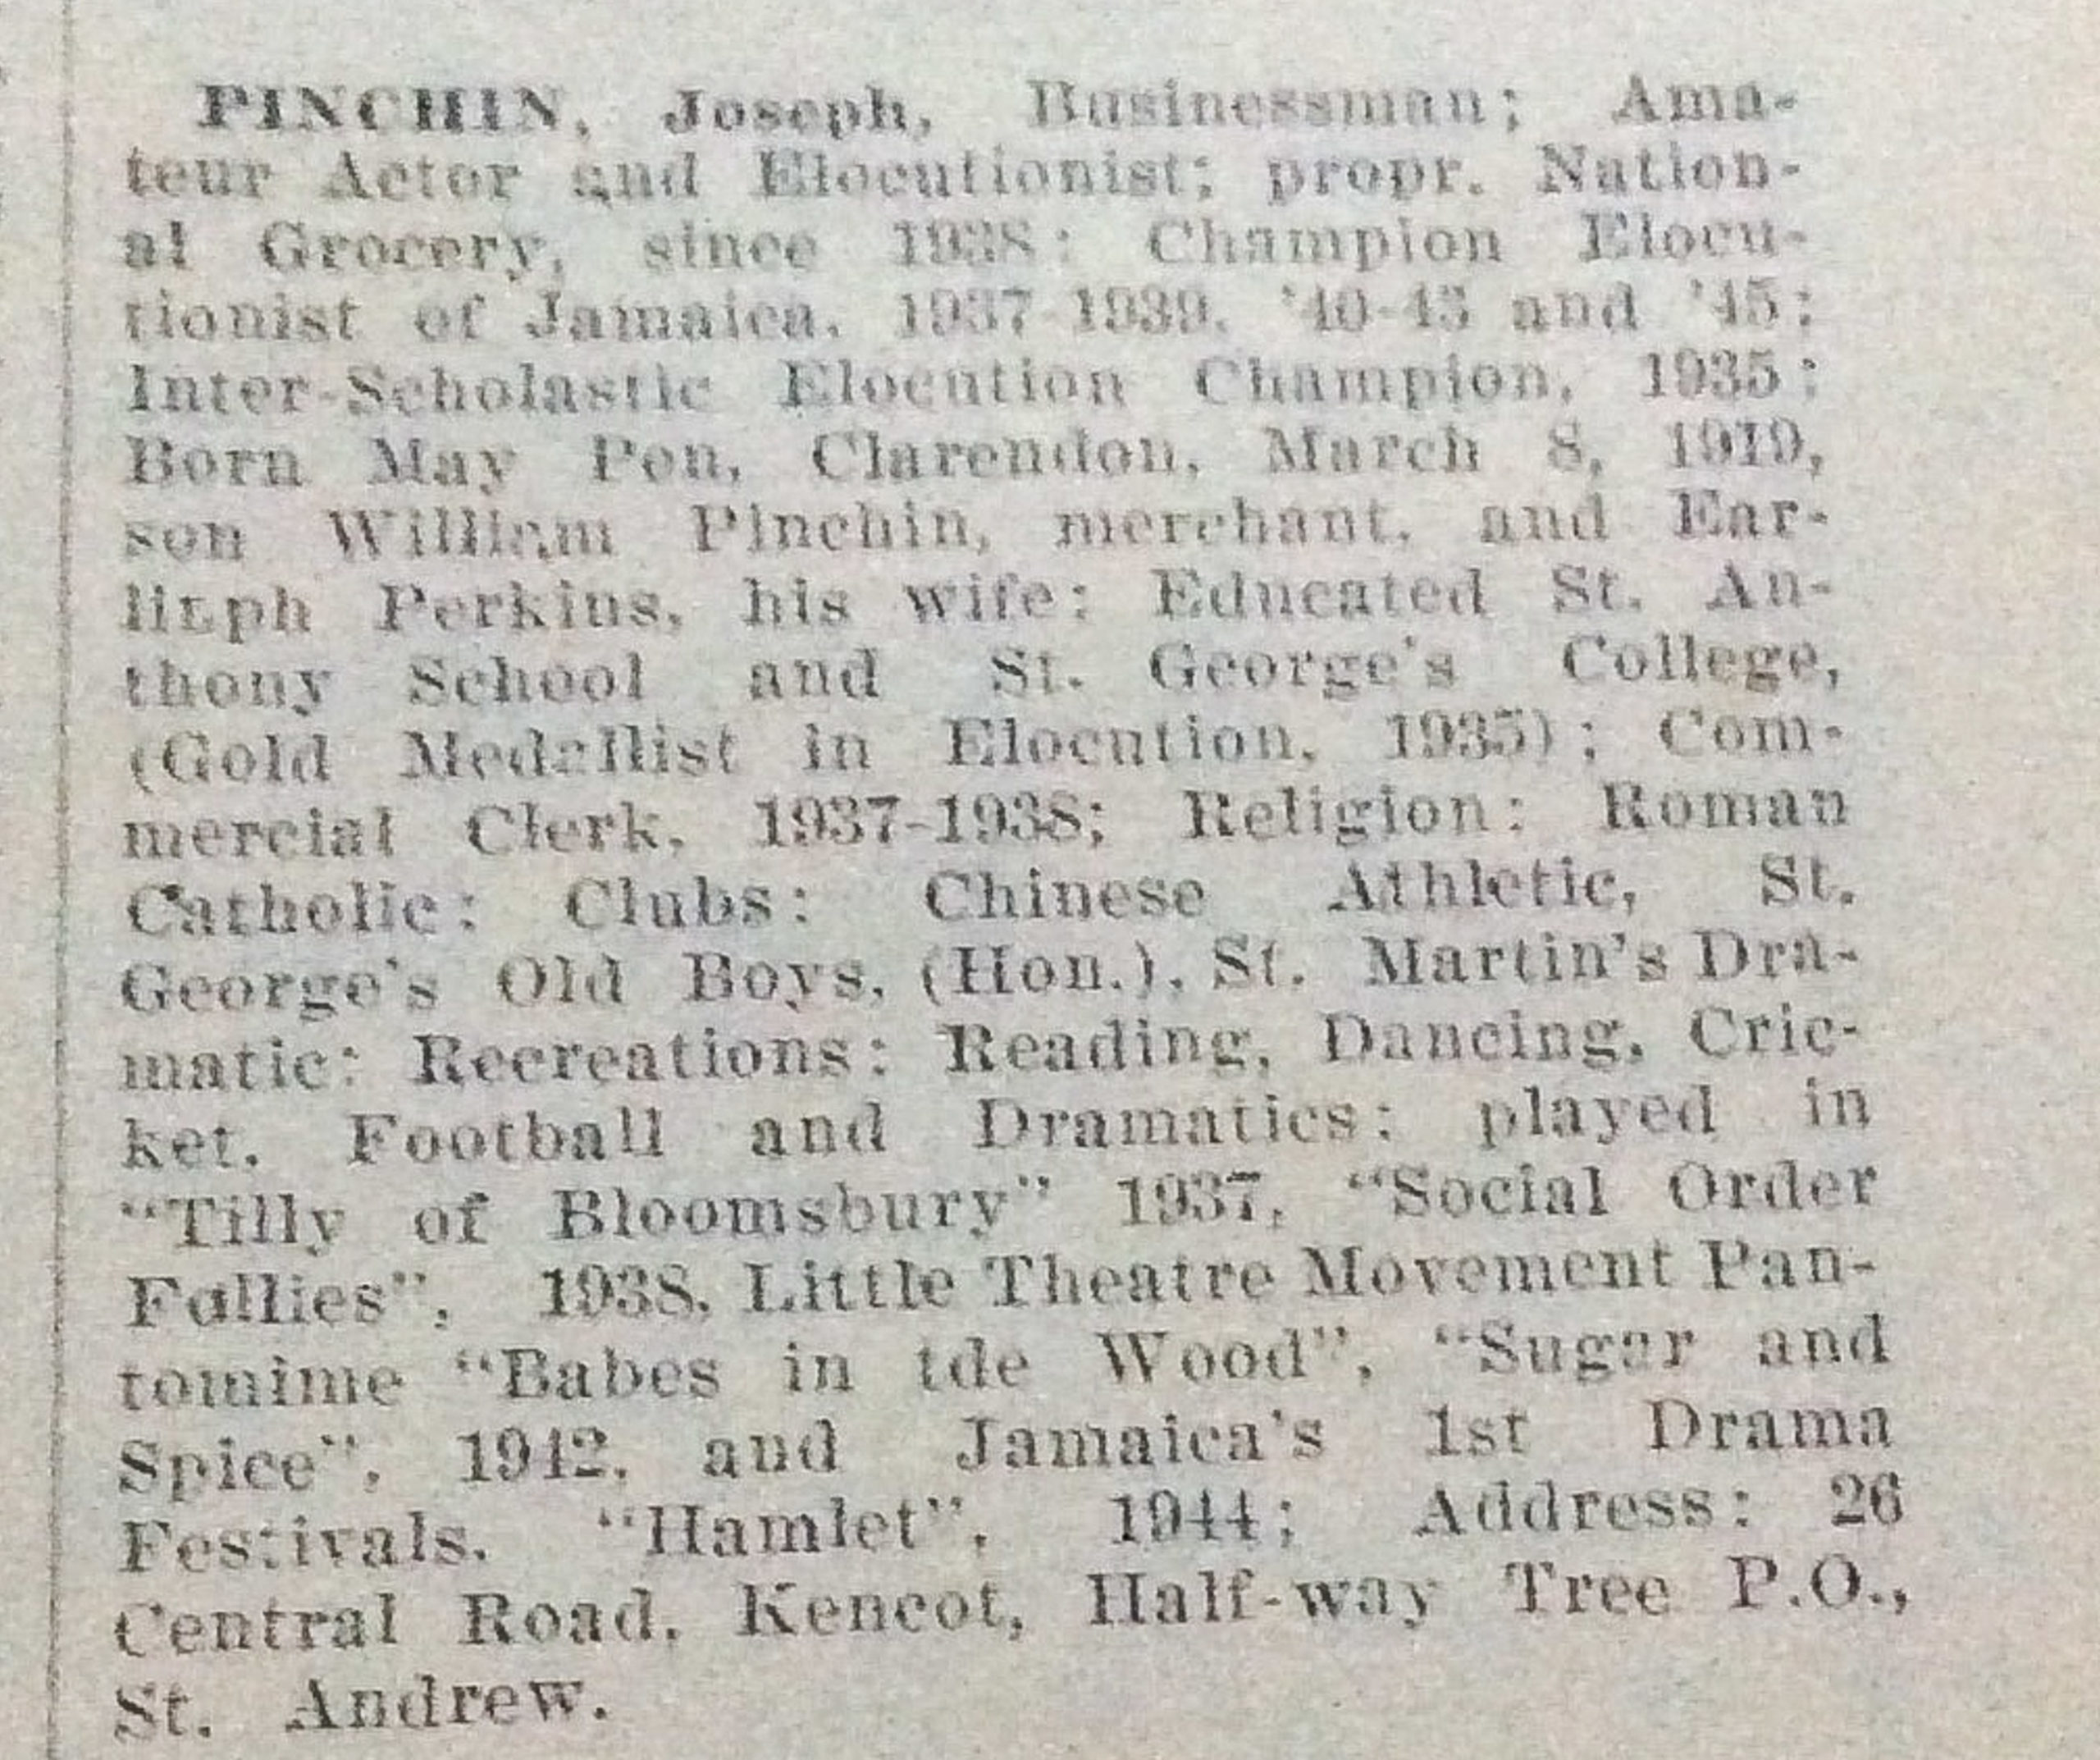 Joseph Pinchin Biography (1945 Jamaica Who's Who)